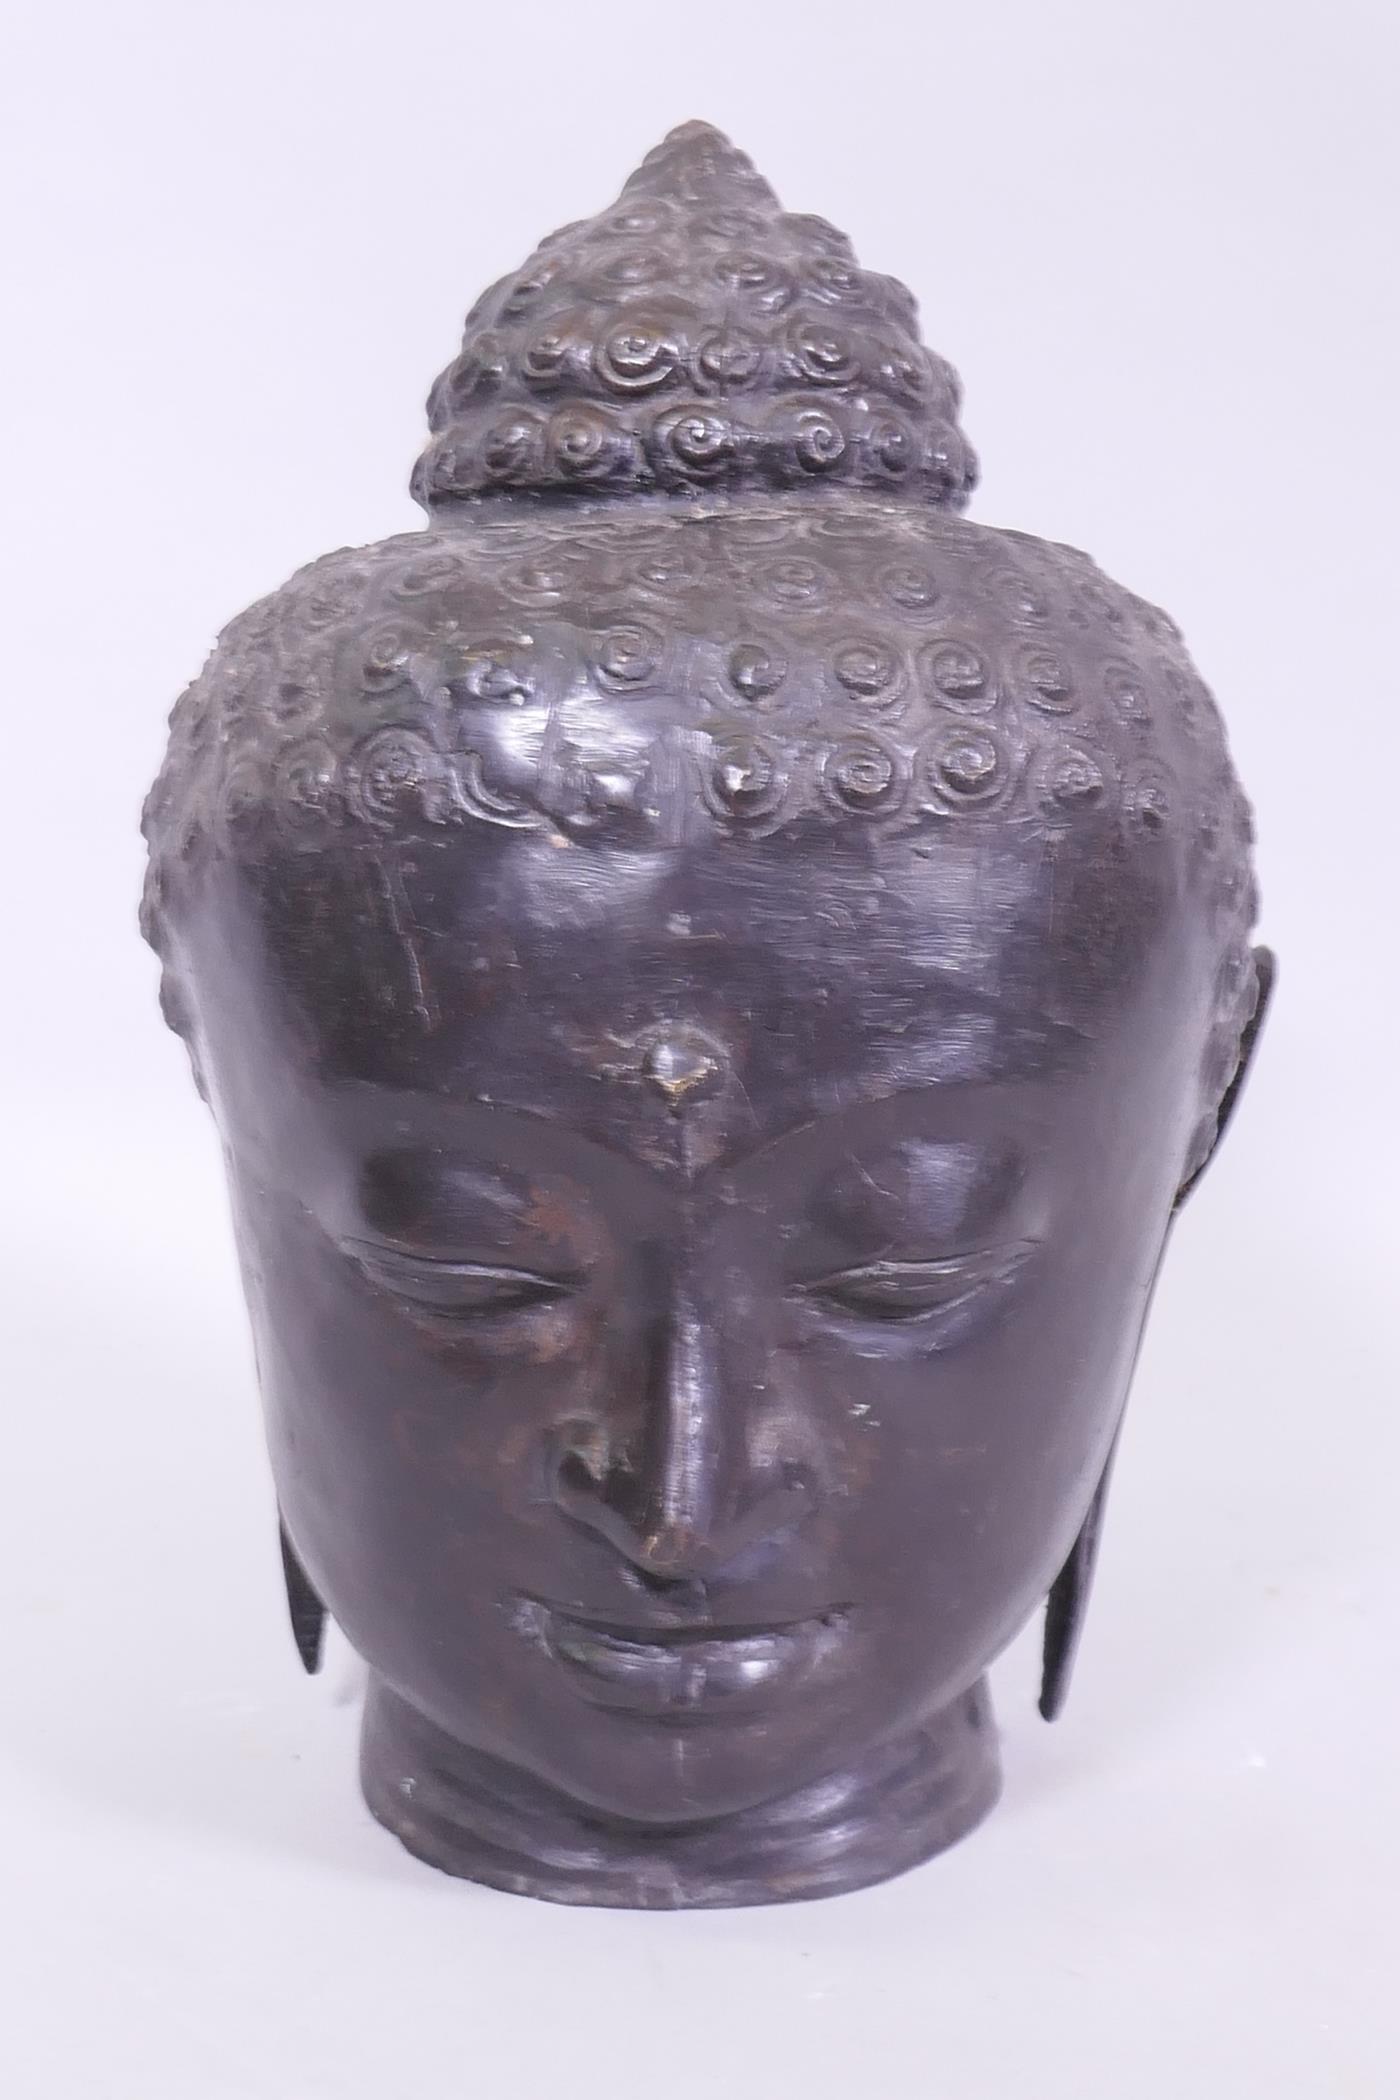 A hollow bronze Buddha's head, 30cm high - Image 2 of 5